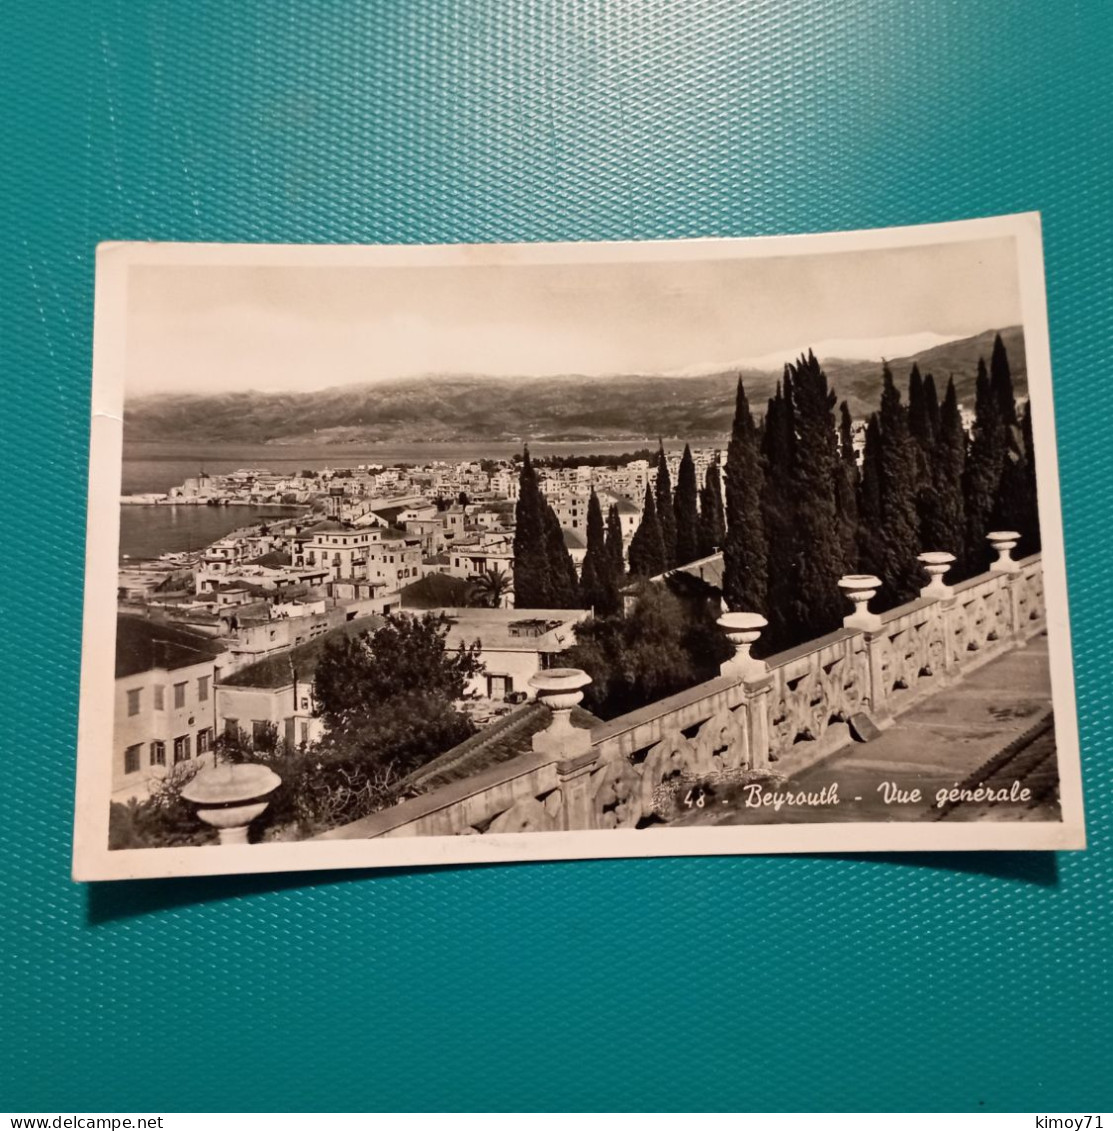 Cartolina Beyrouth - Vue Generale. Viaggiata 1955 - Libyen